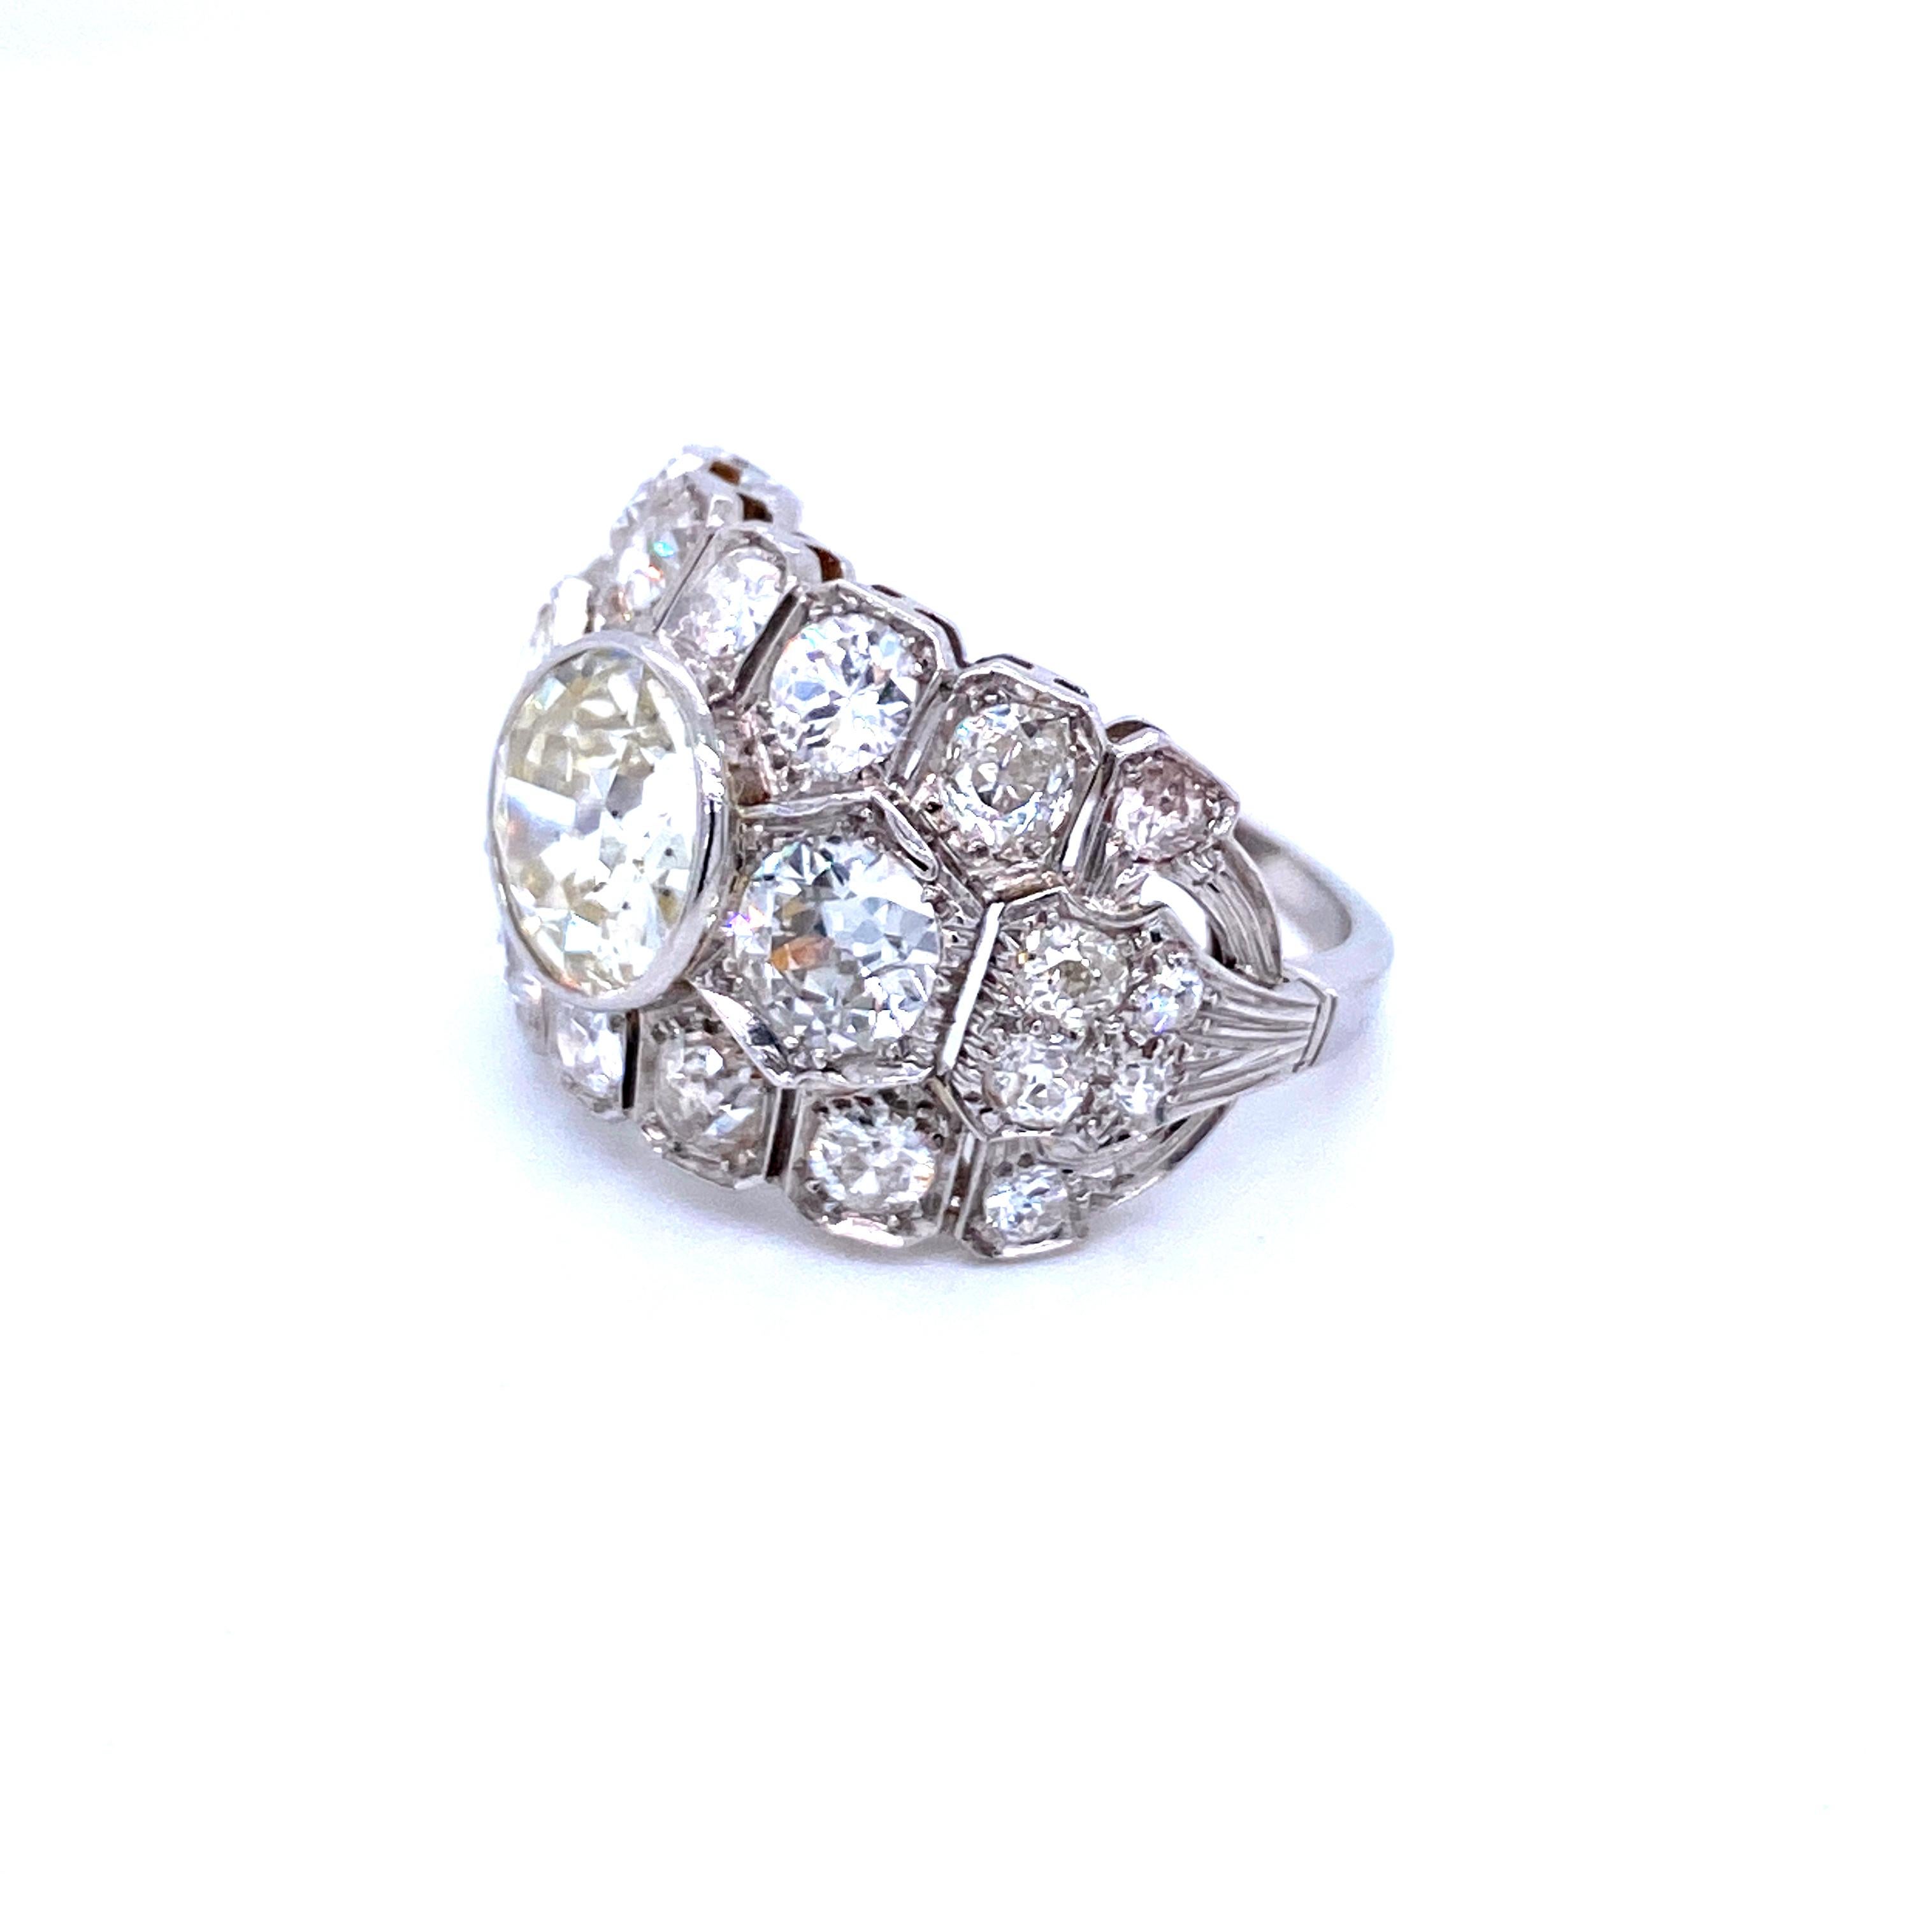 Old Mine Cut Art Deco 7 Carat Diamond Plaque Ring